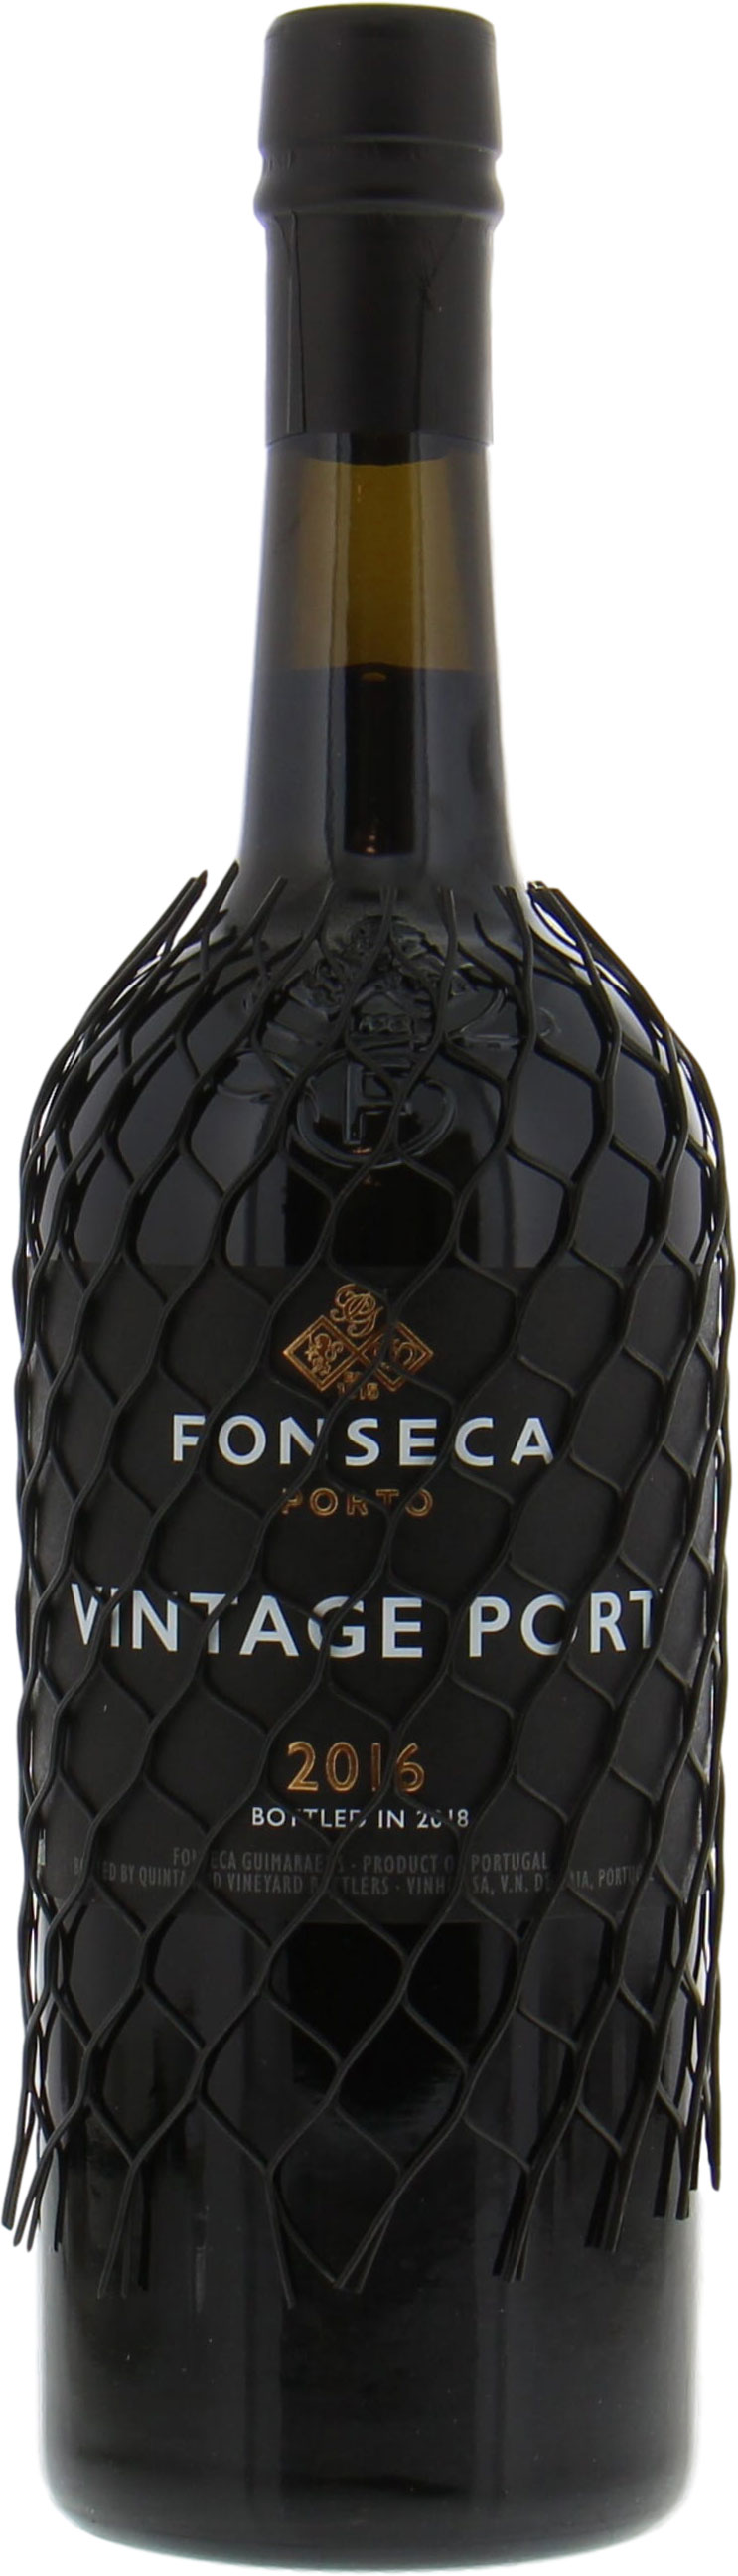 Fonseca - Vintage Port 2016 Perfect